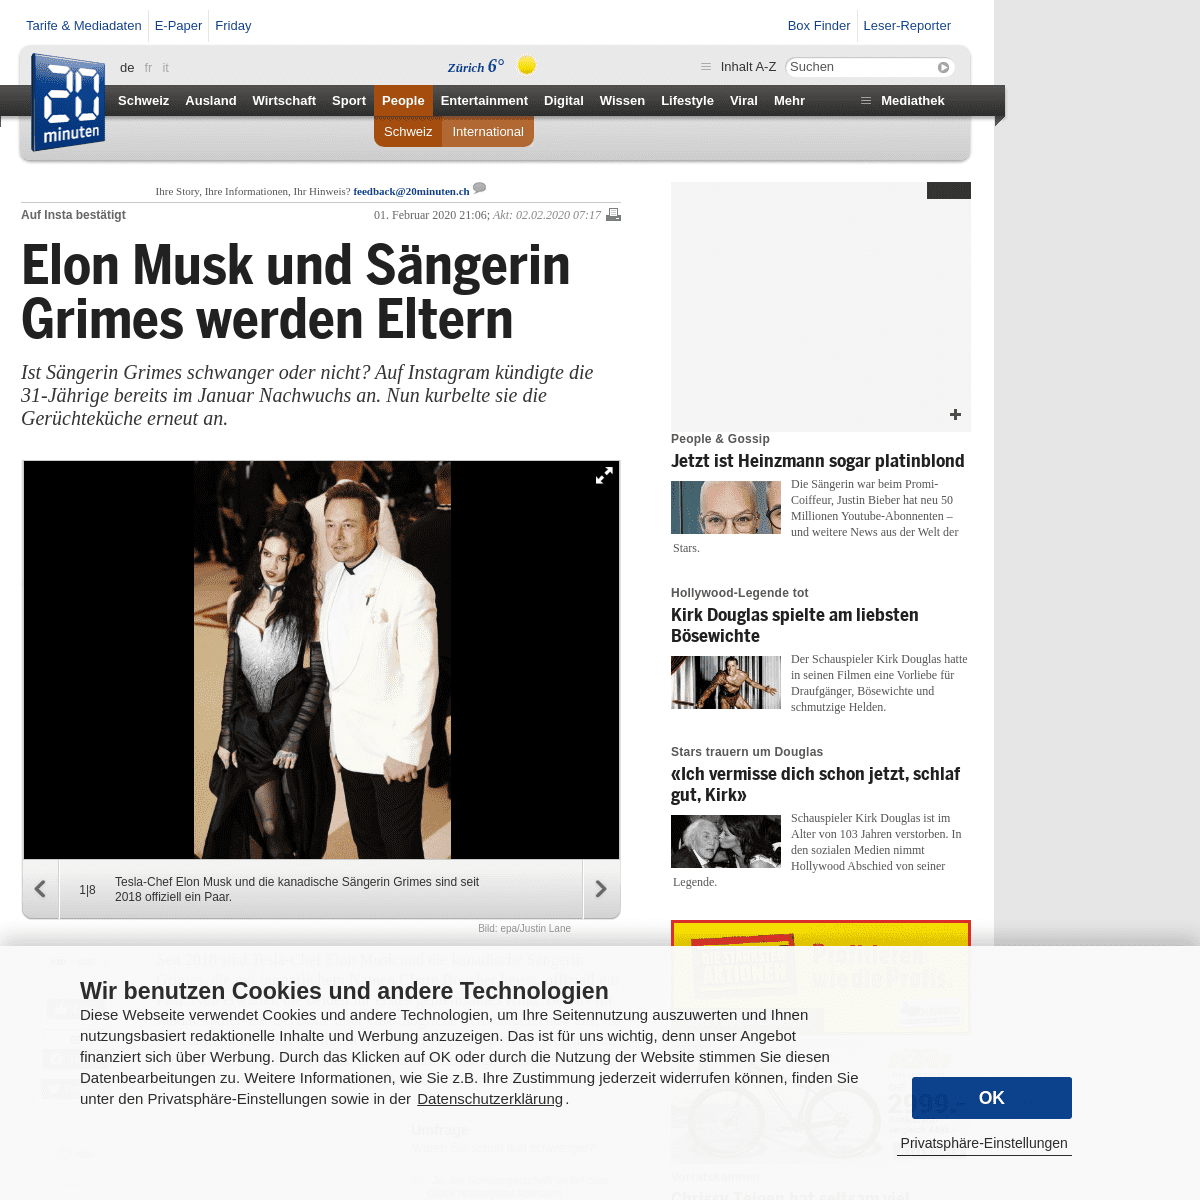 A complete backup of www.20min.ch/people/international/story/Elon-Musk-und-Saengerin-Grimes-werden-Eltern-23468759